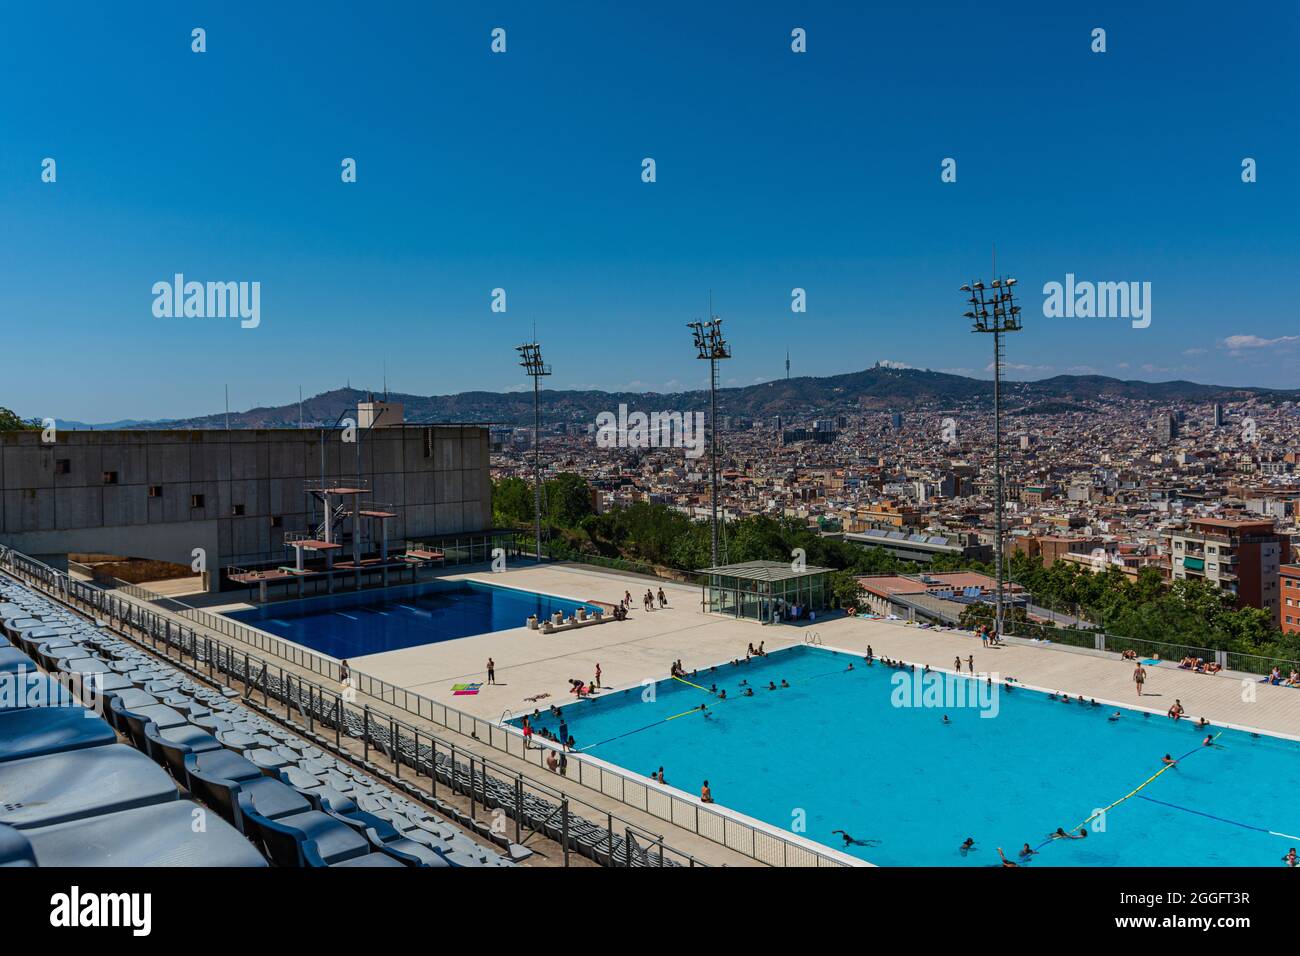 Barcelona Olympic swimming pool in 2021 Stock Photo